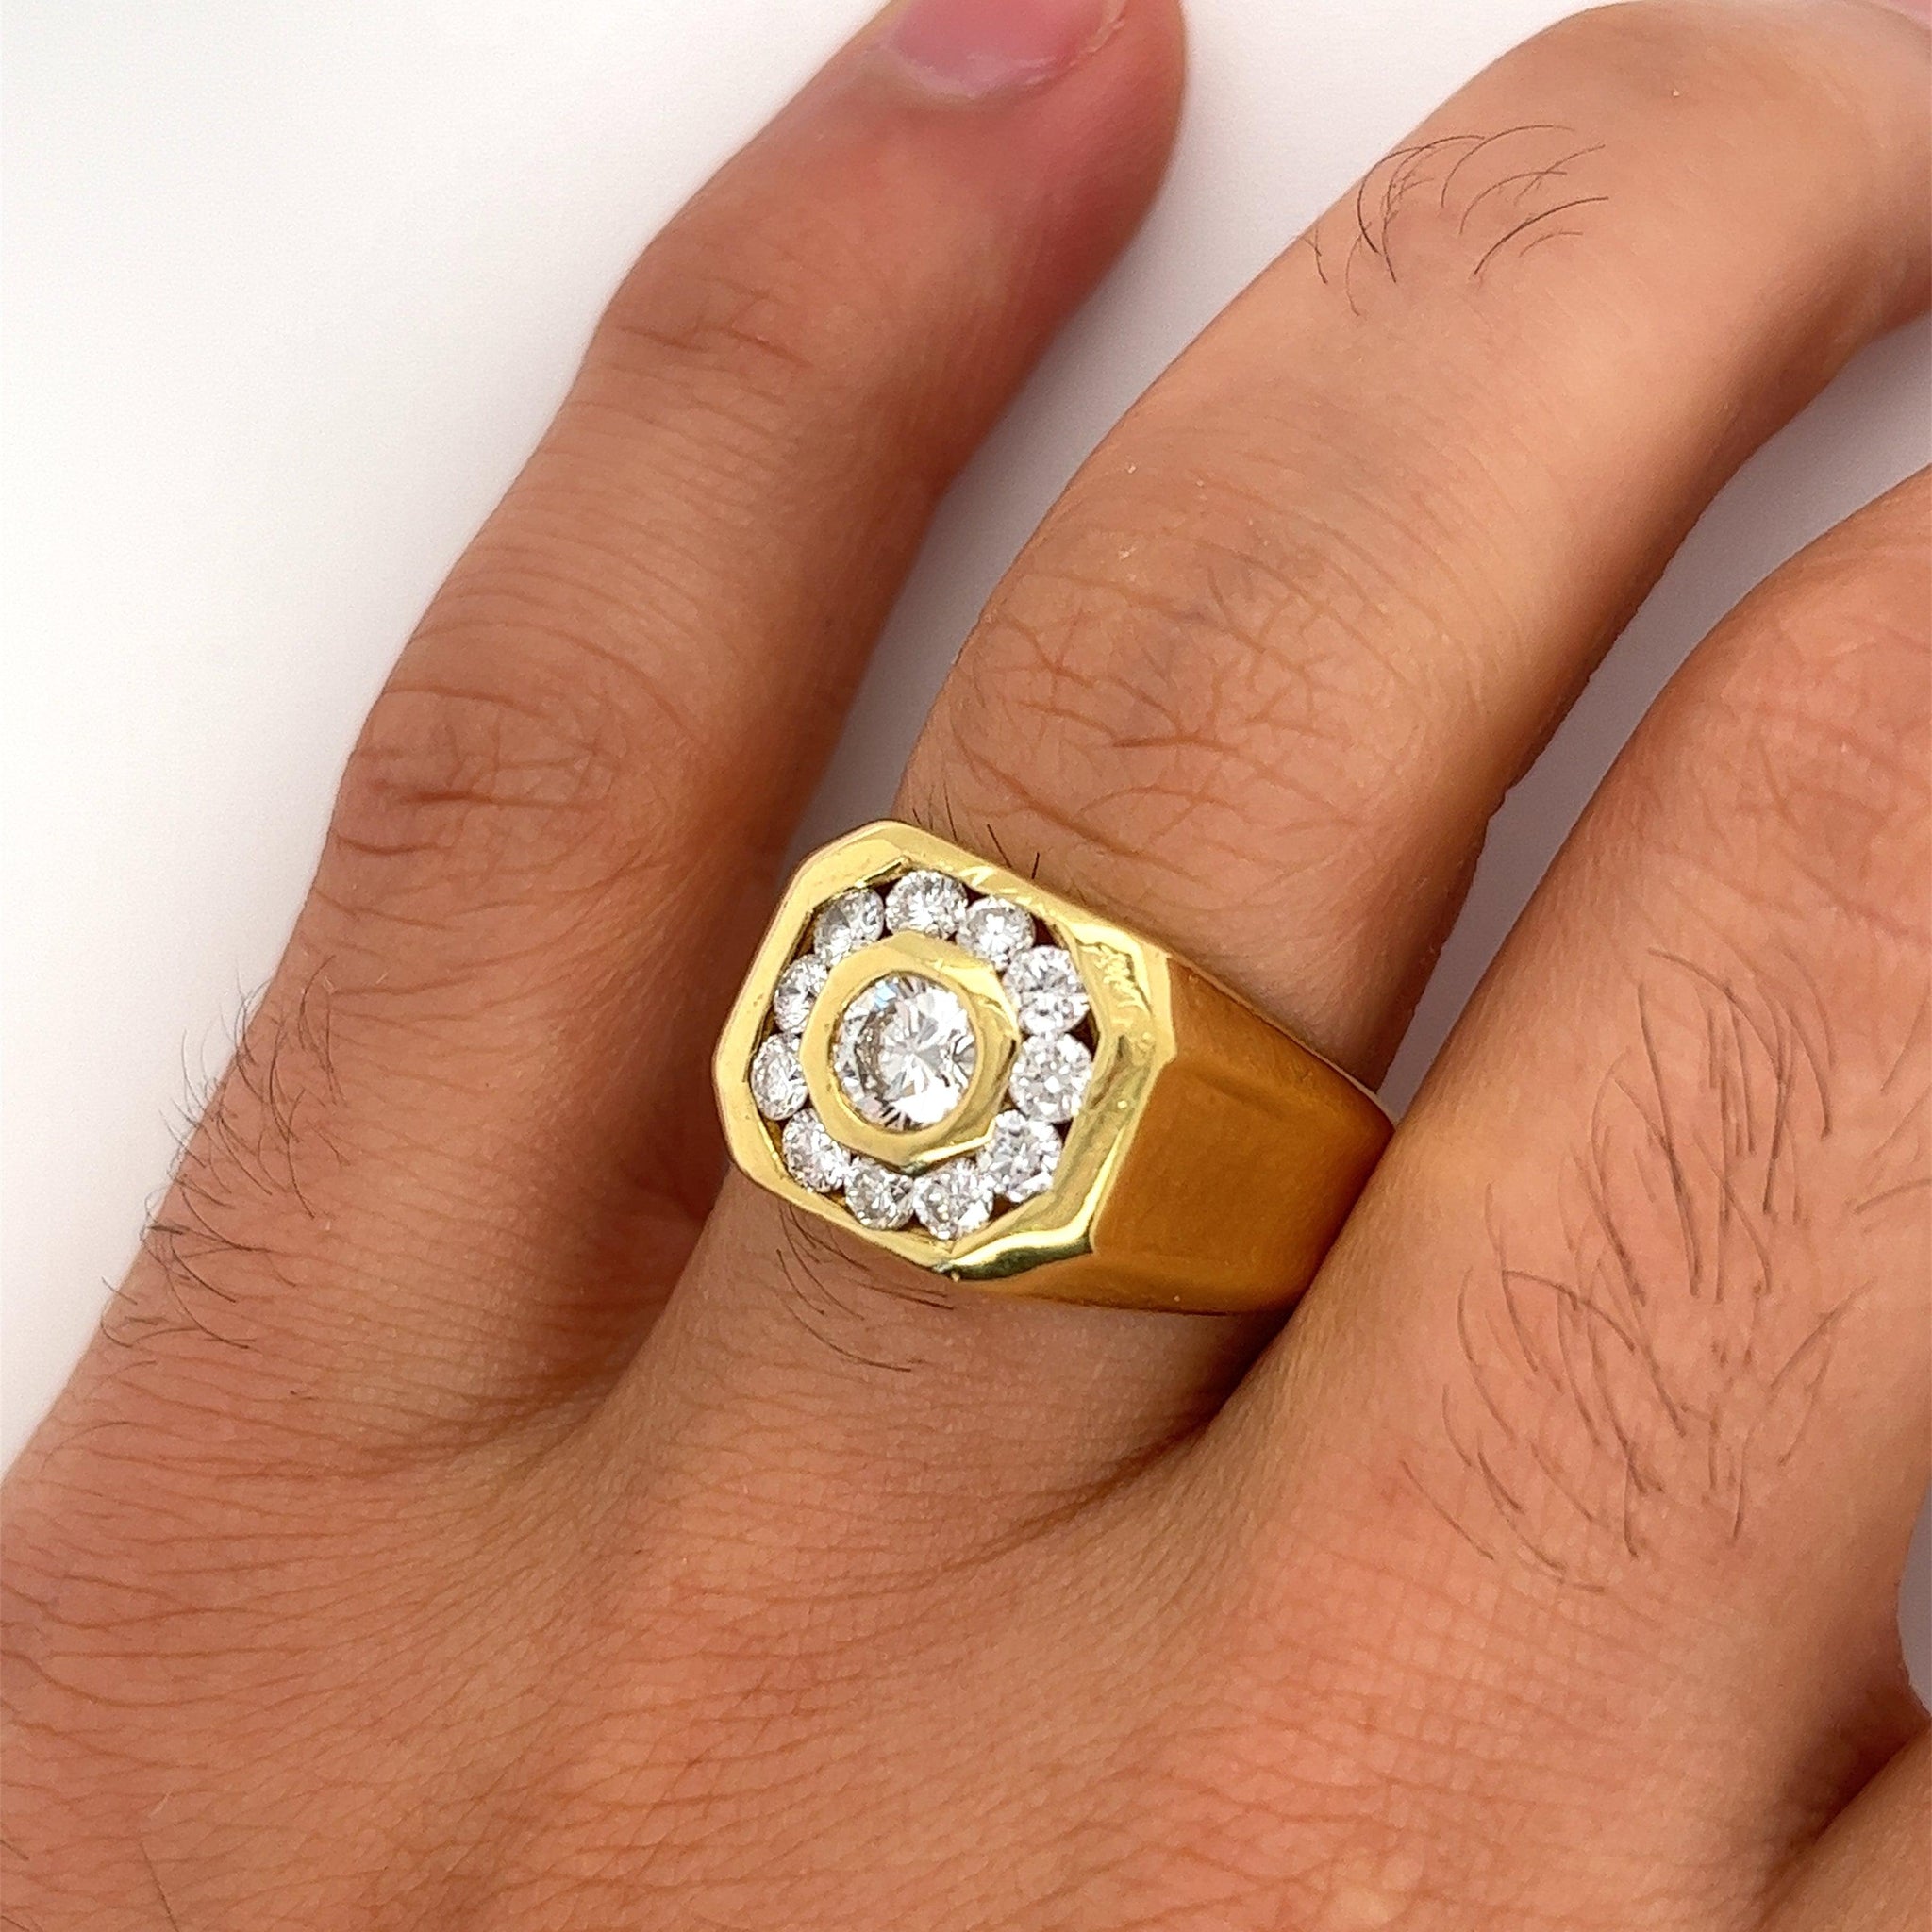 23 K Designer Men Gold Ring, 5 Gm at Rs 27000/piece in Bhadohi | ID:  22607613912